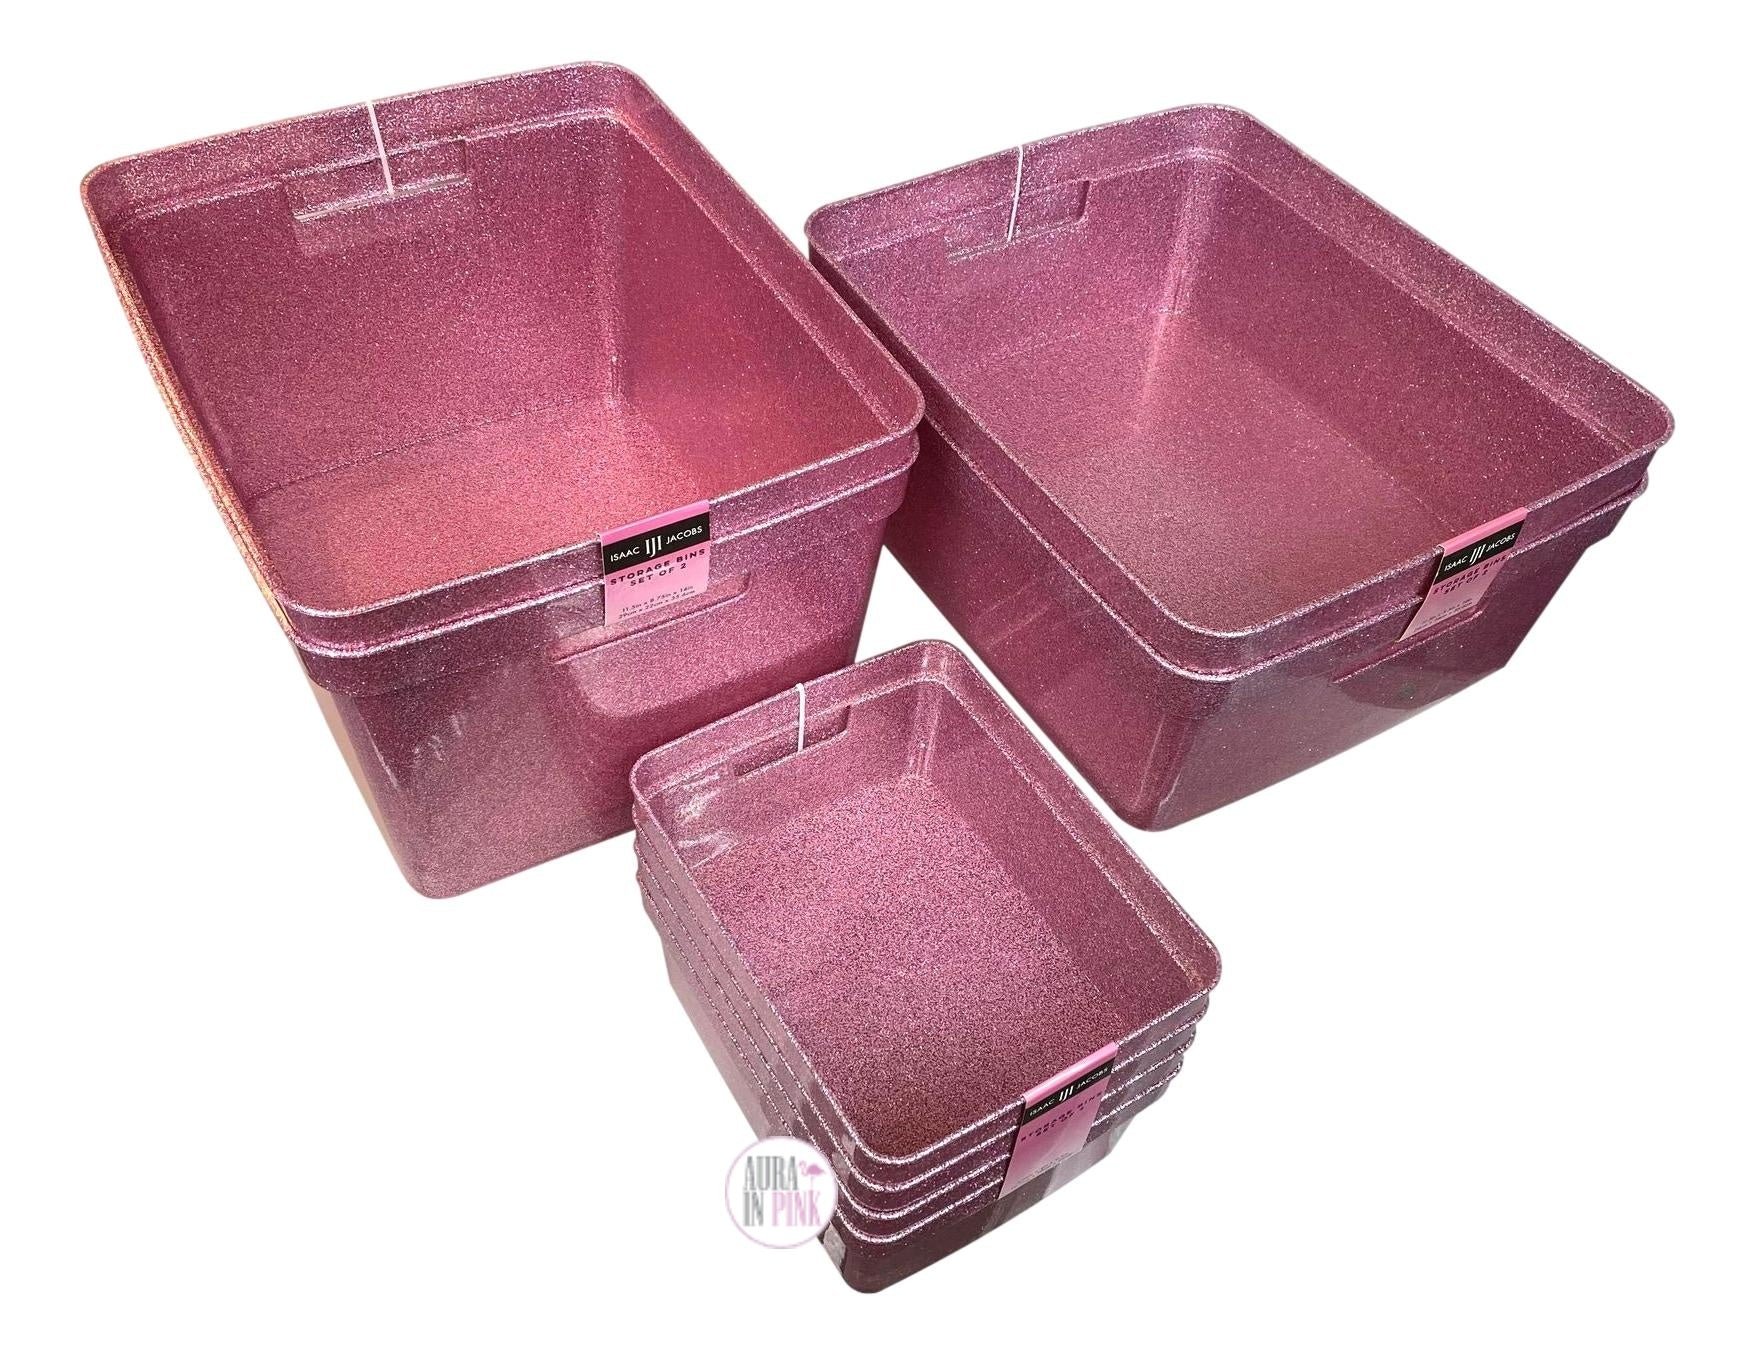 Isaac Jacobs Glitter Beauty Accessories Pink Glitter Storage Organizer –  Aura In Pink Inc.